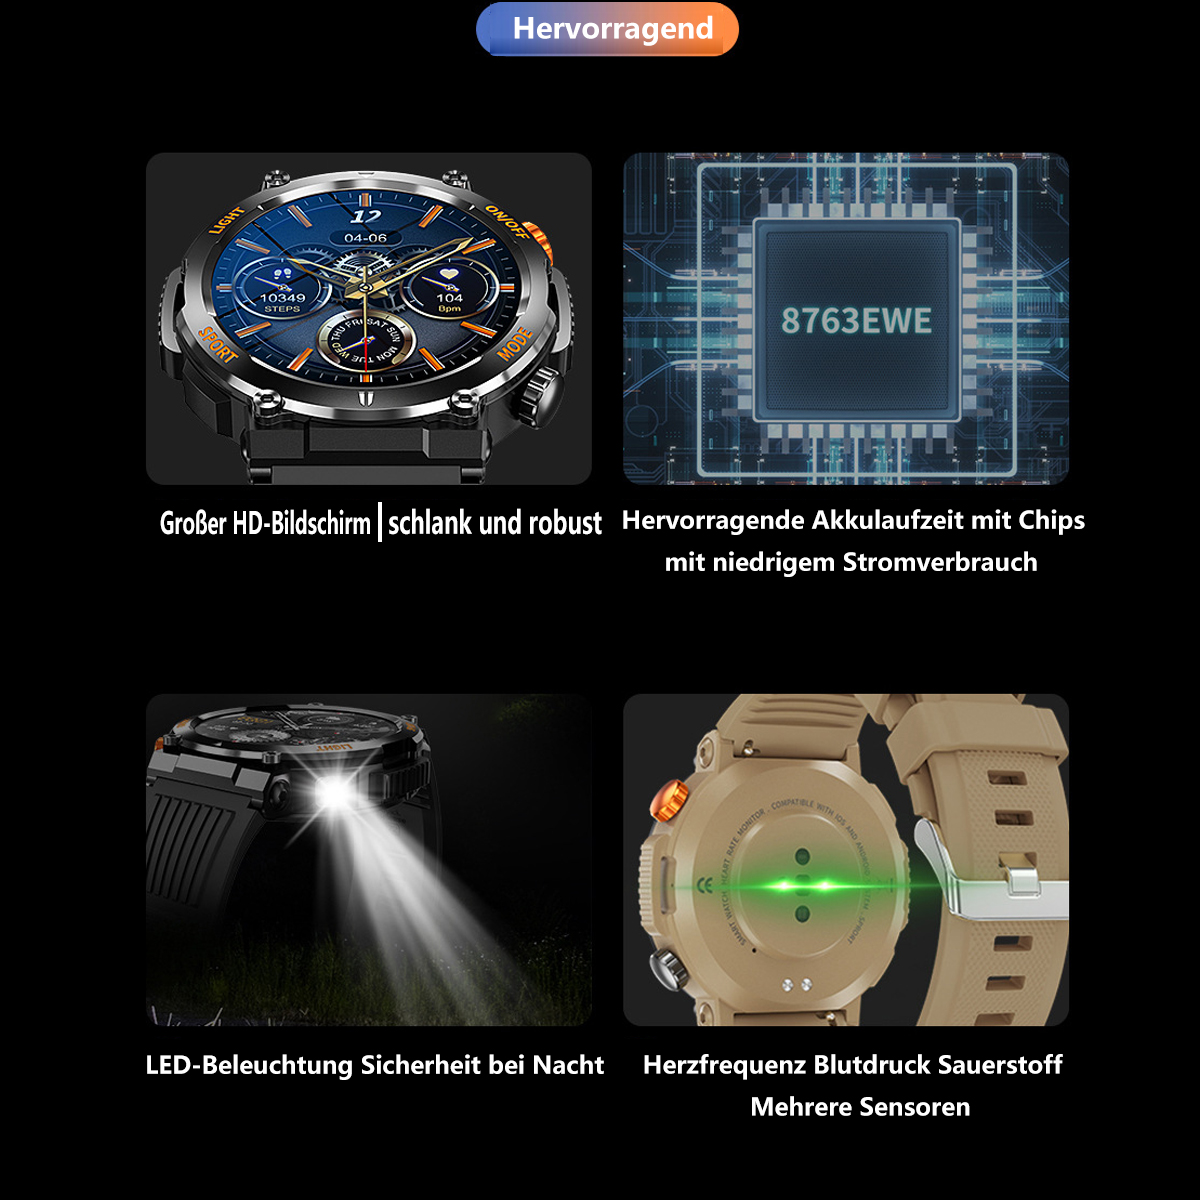 ENBAOXIN Smart Uhr Silikon sprechende Blutdruckmessgerät Silikon Silikon, Watch Orange Smartwatch LED Bluetooth Herzfrequenz beleuchtet Kompass